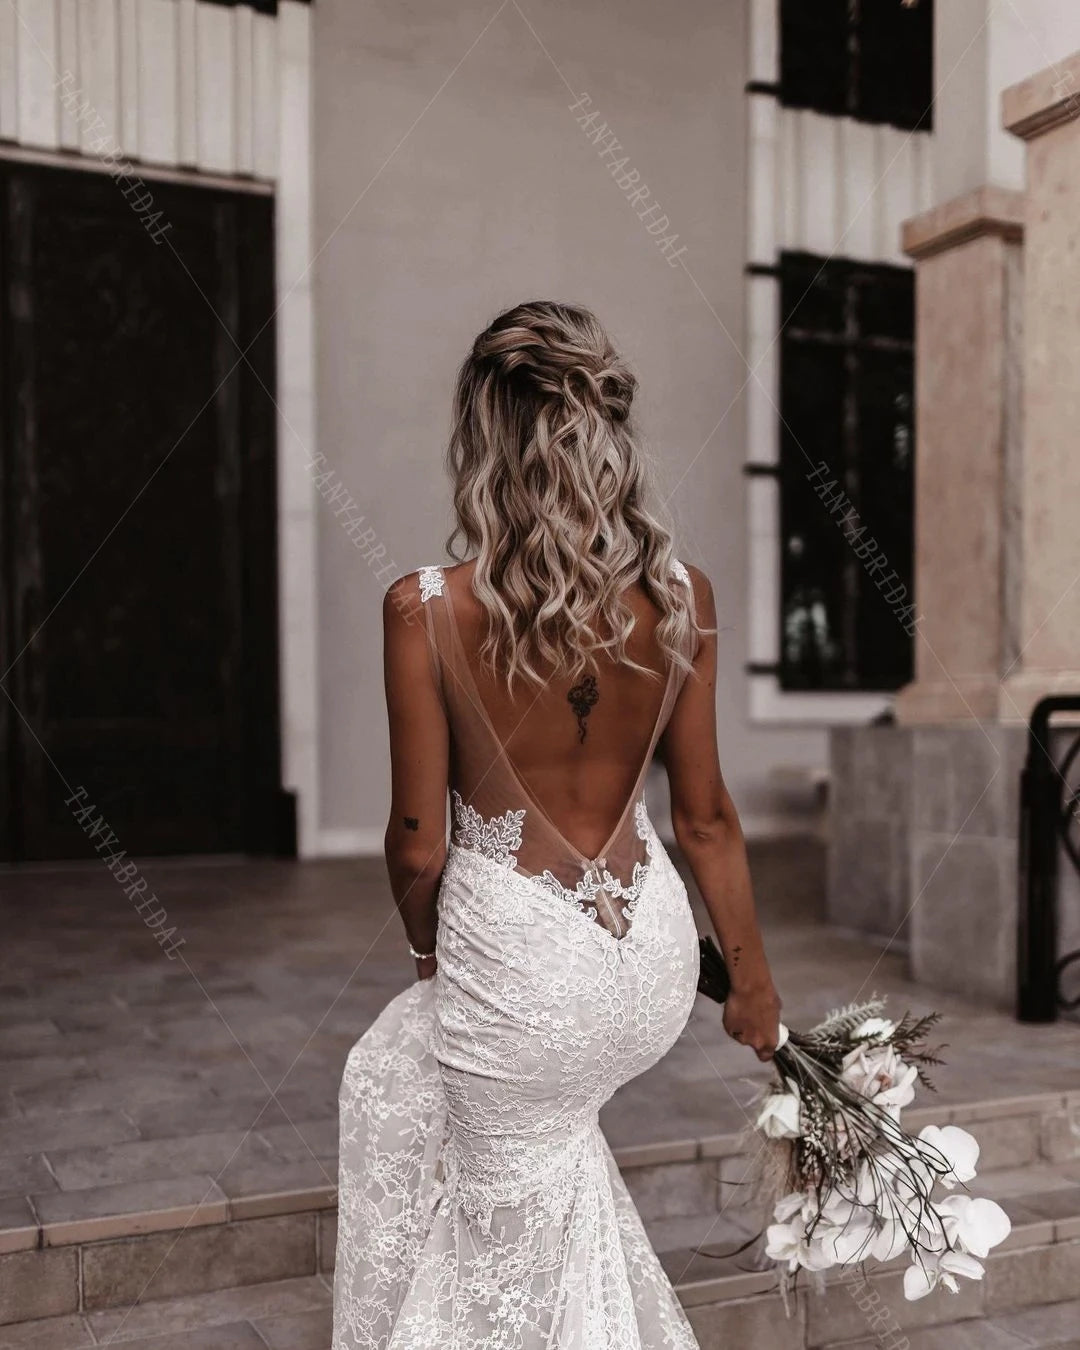 Romantic Lace Wedding Dresses Mermaid Backless Charming Noivas DW570 –  TANYA BRIDAL